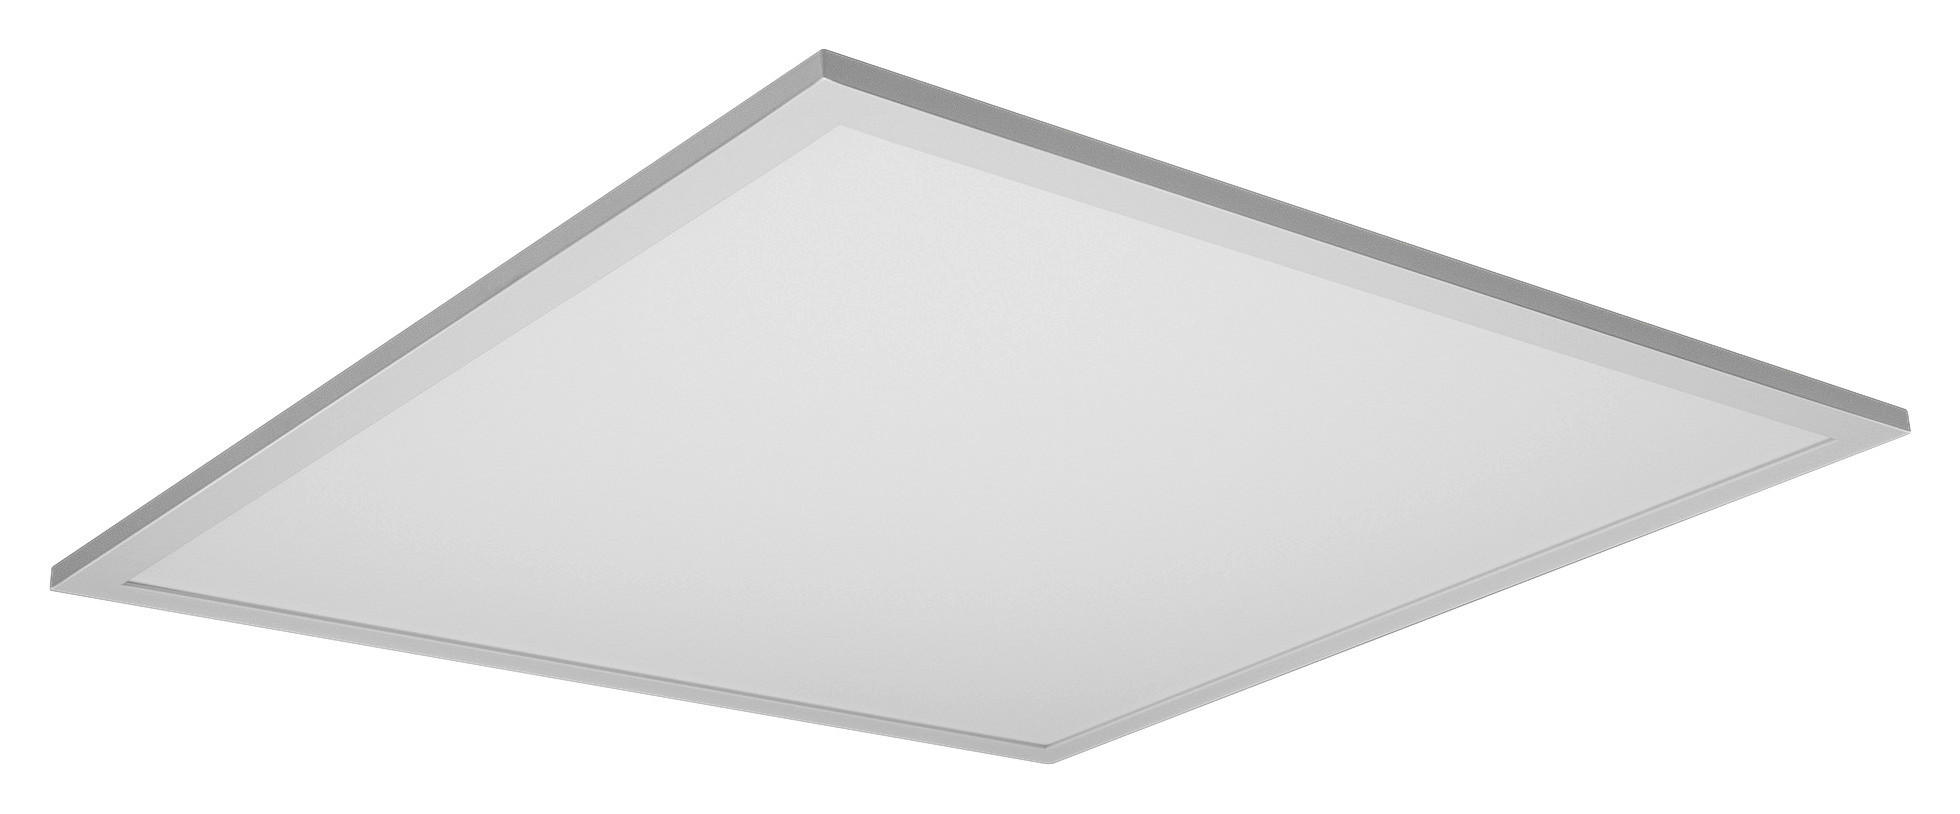 LED-PANEEL    - Weiß, Design, Metall (6/6/5,6cm) - Ledvance